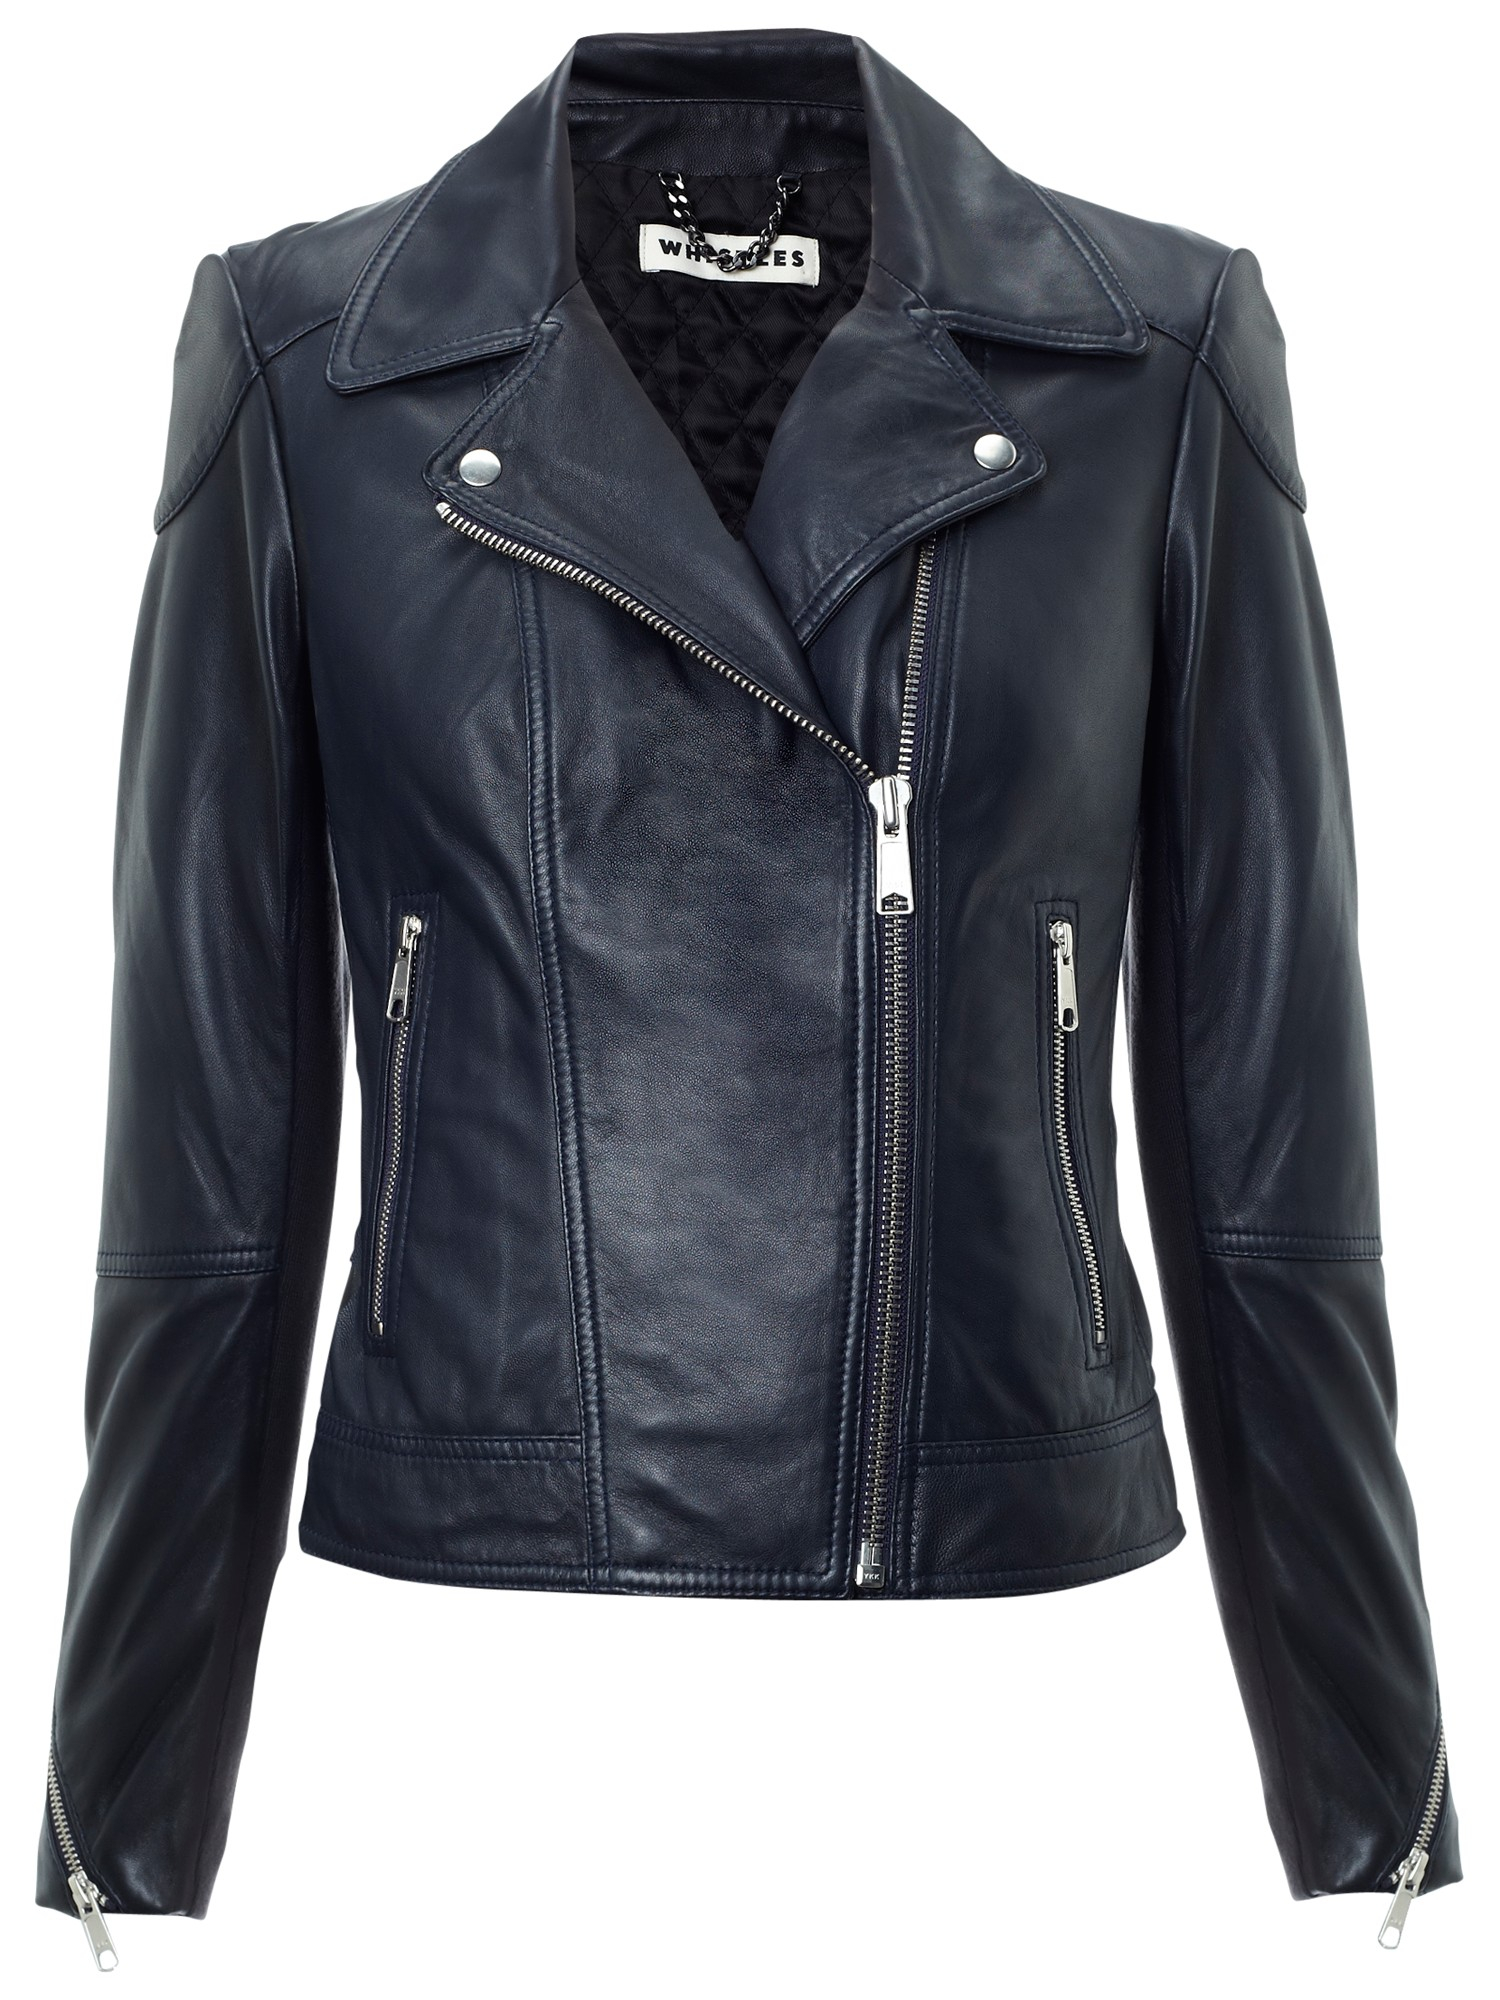 Whistles Lita Leather Biker Jacket in Navy (Blue) - Lyst